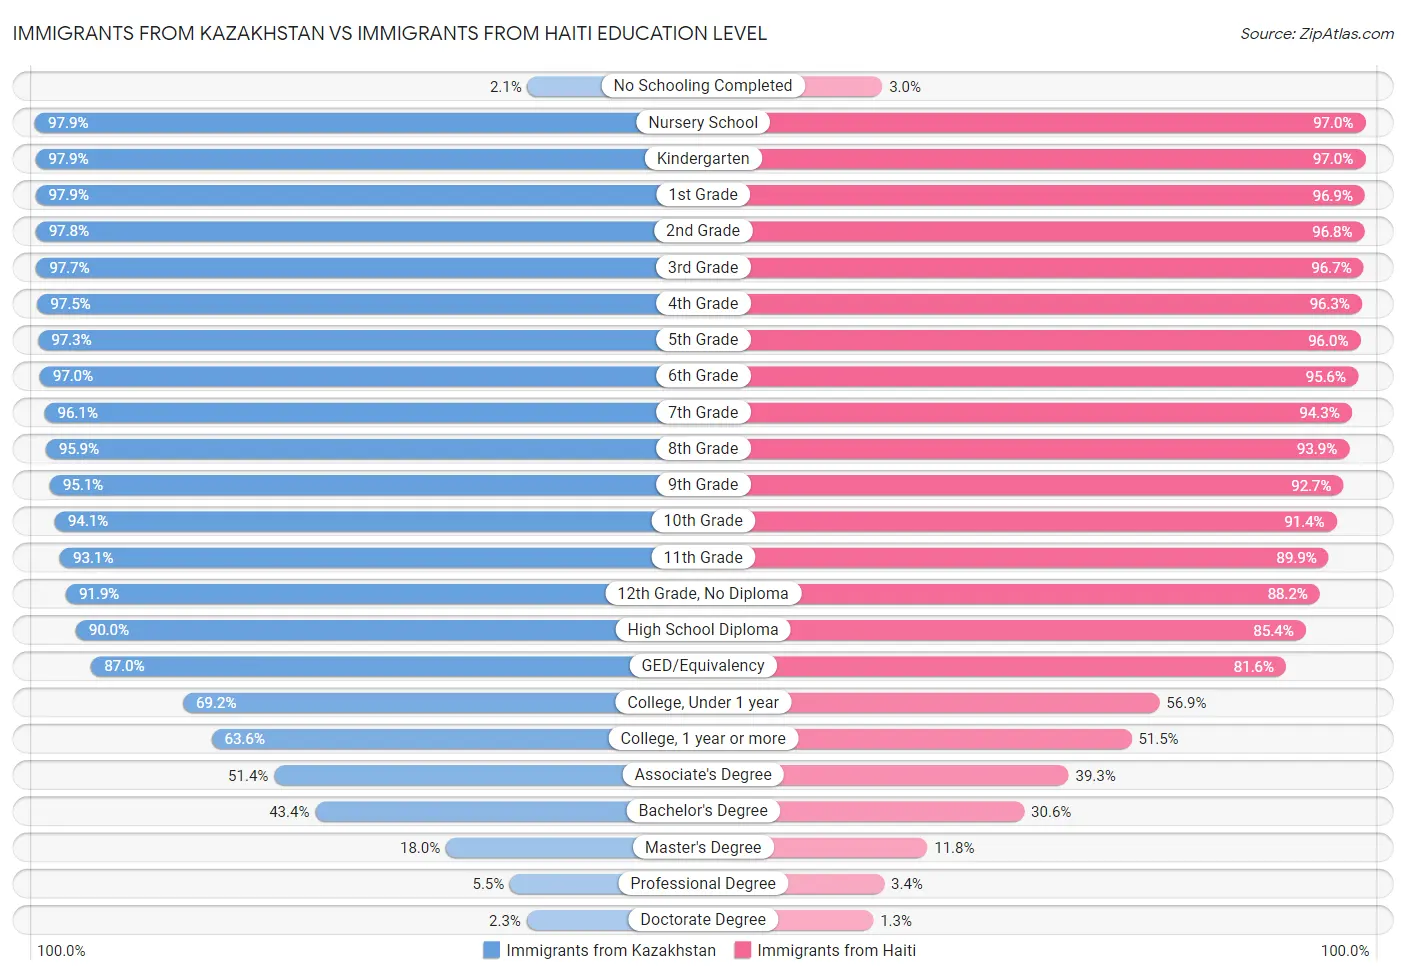 Immigrants from Kazakhstan vs Immigrants from Haiti Education Level